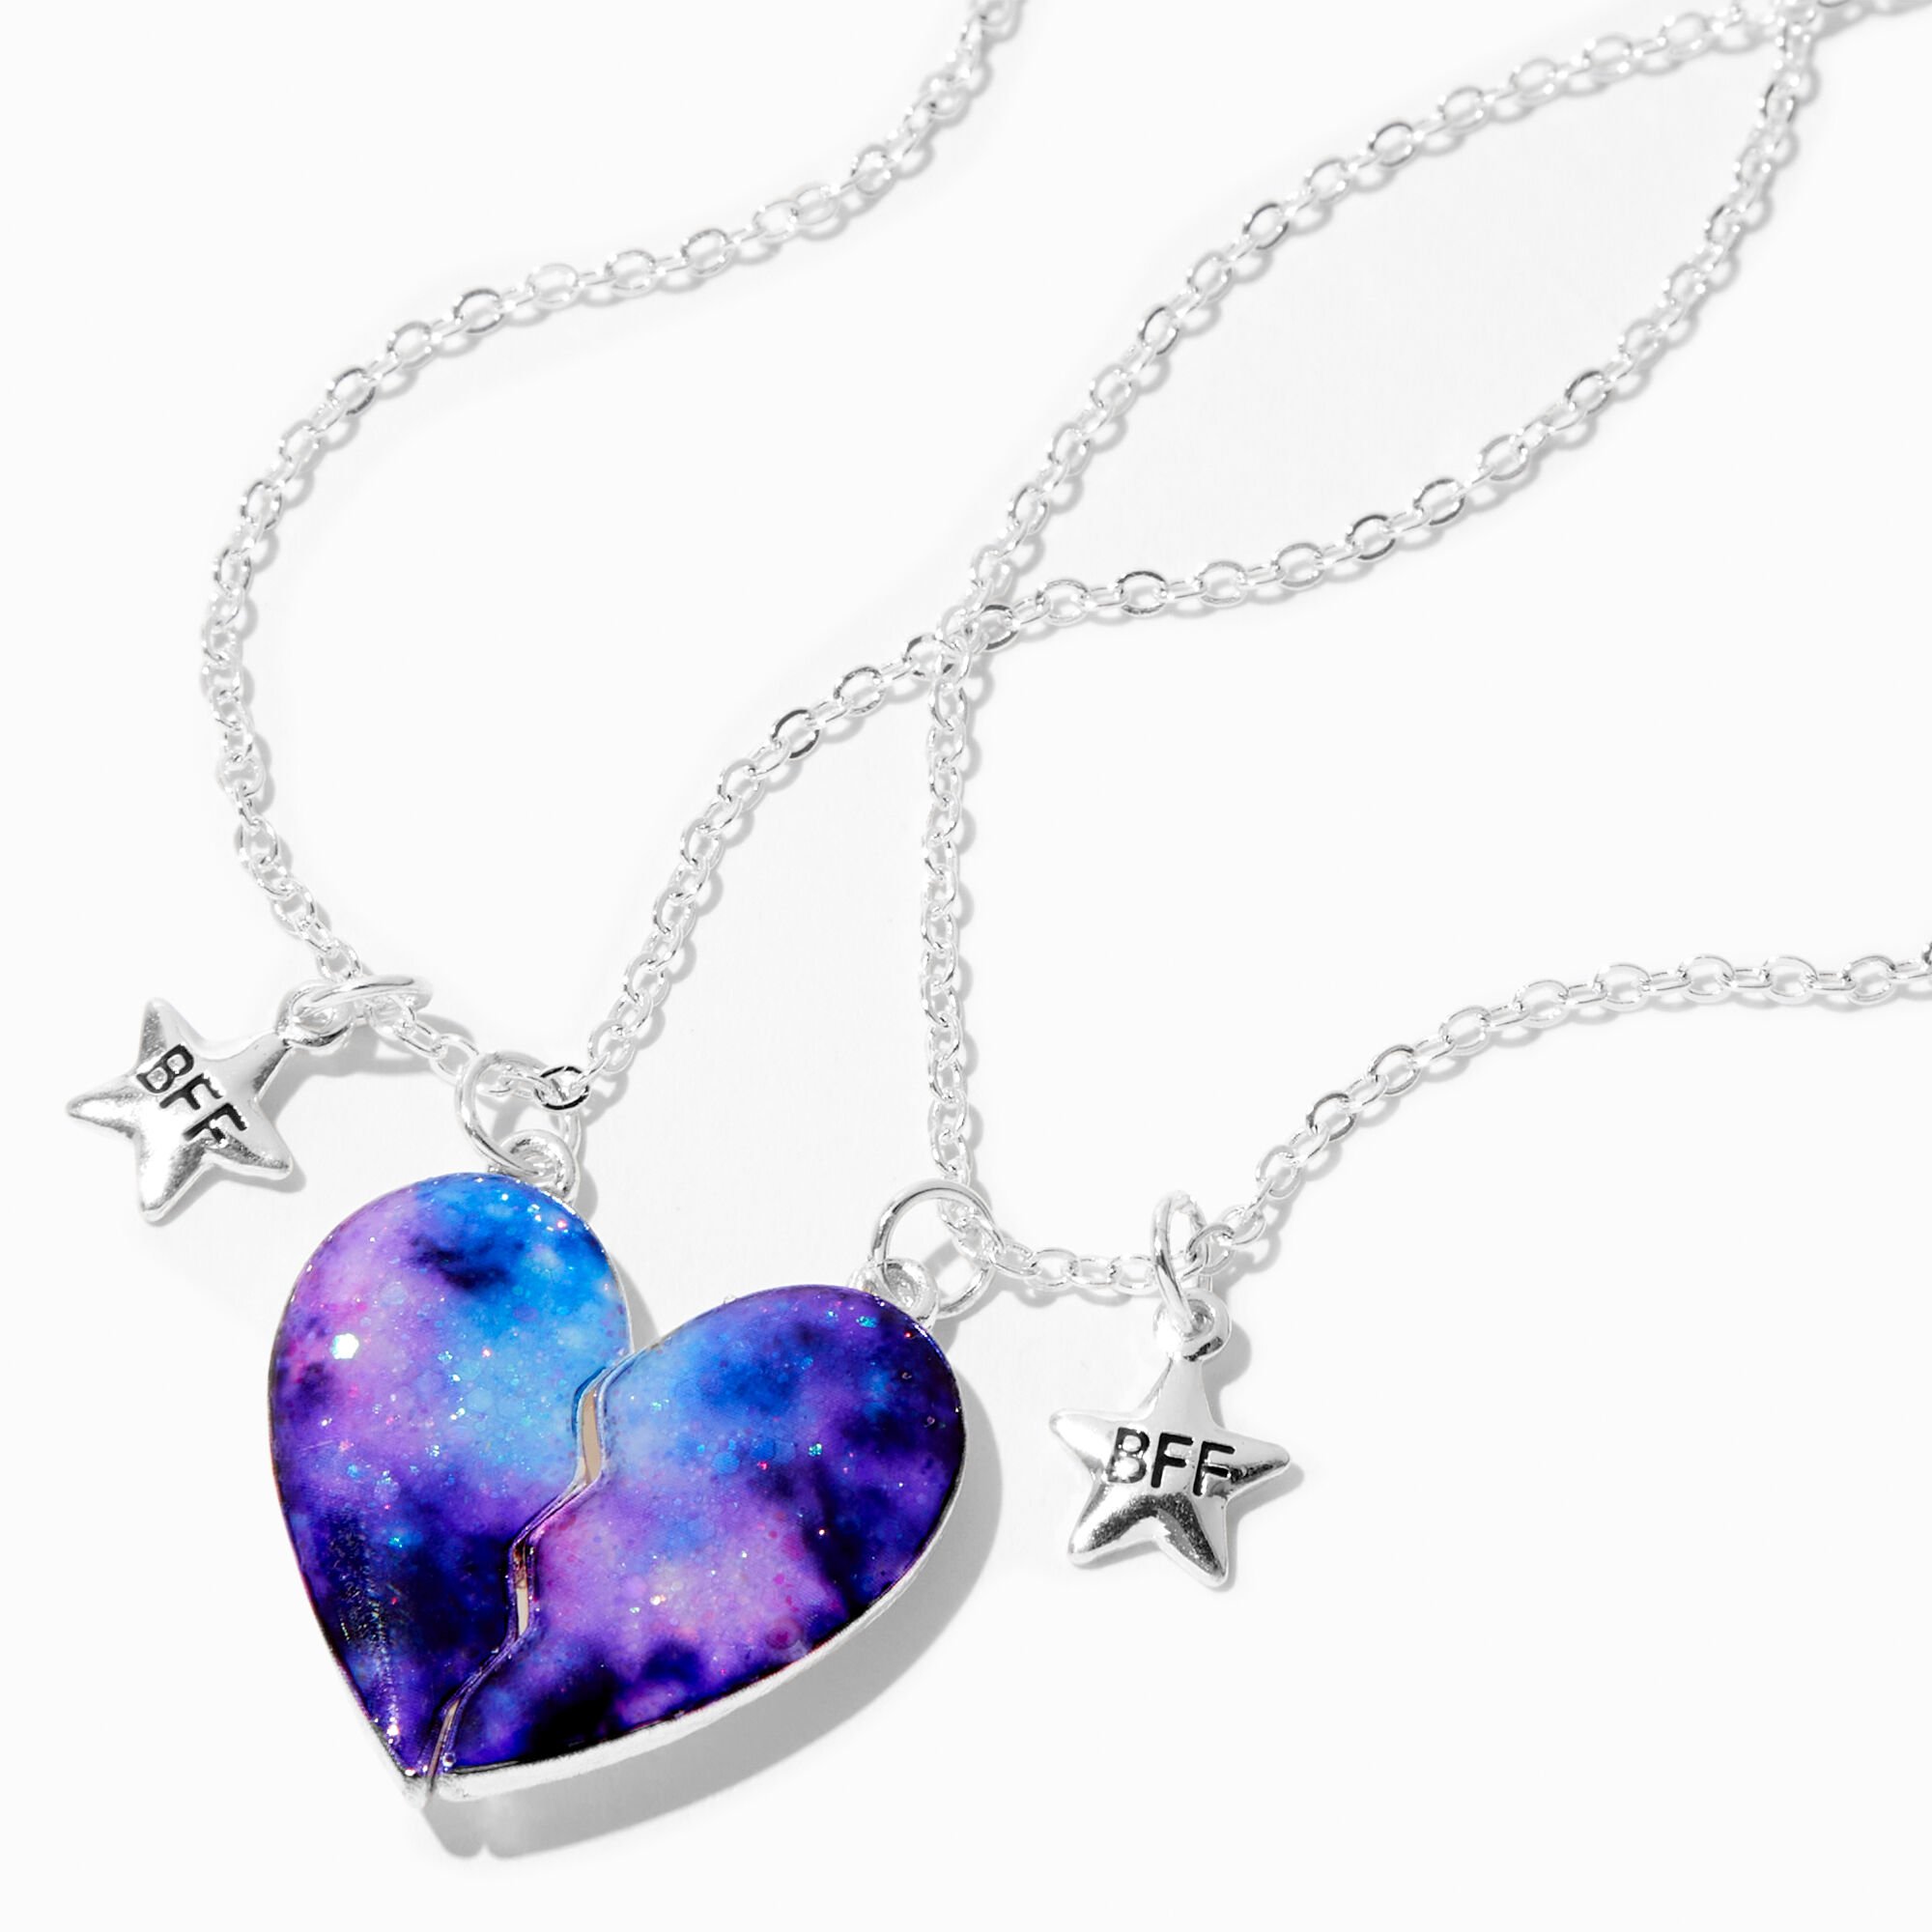 View Claires Best Friends Galaxy Split Heart Pendant Necklaces 2 Pack Silver information